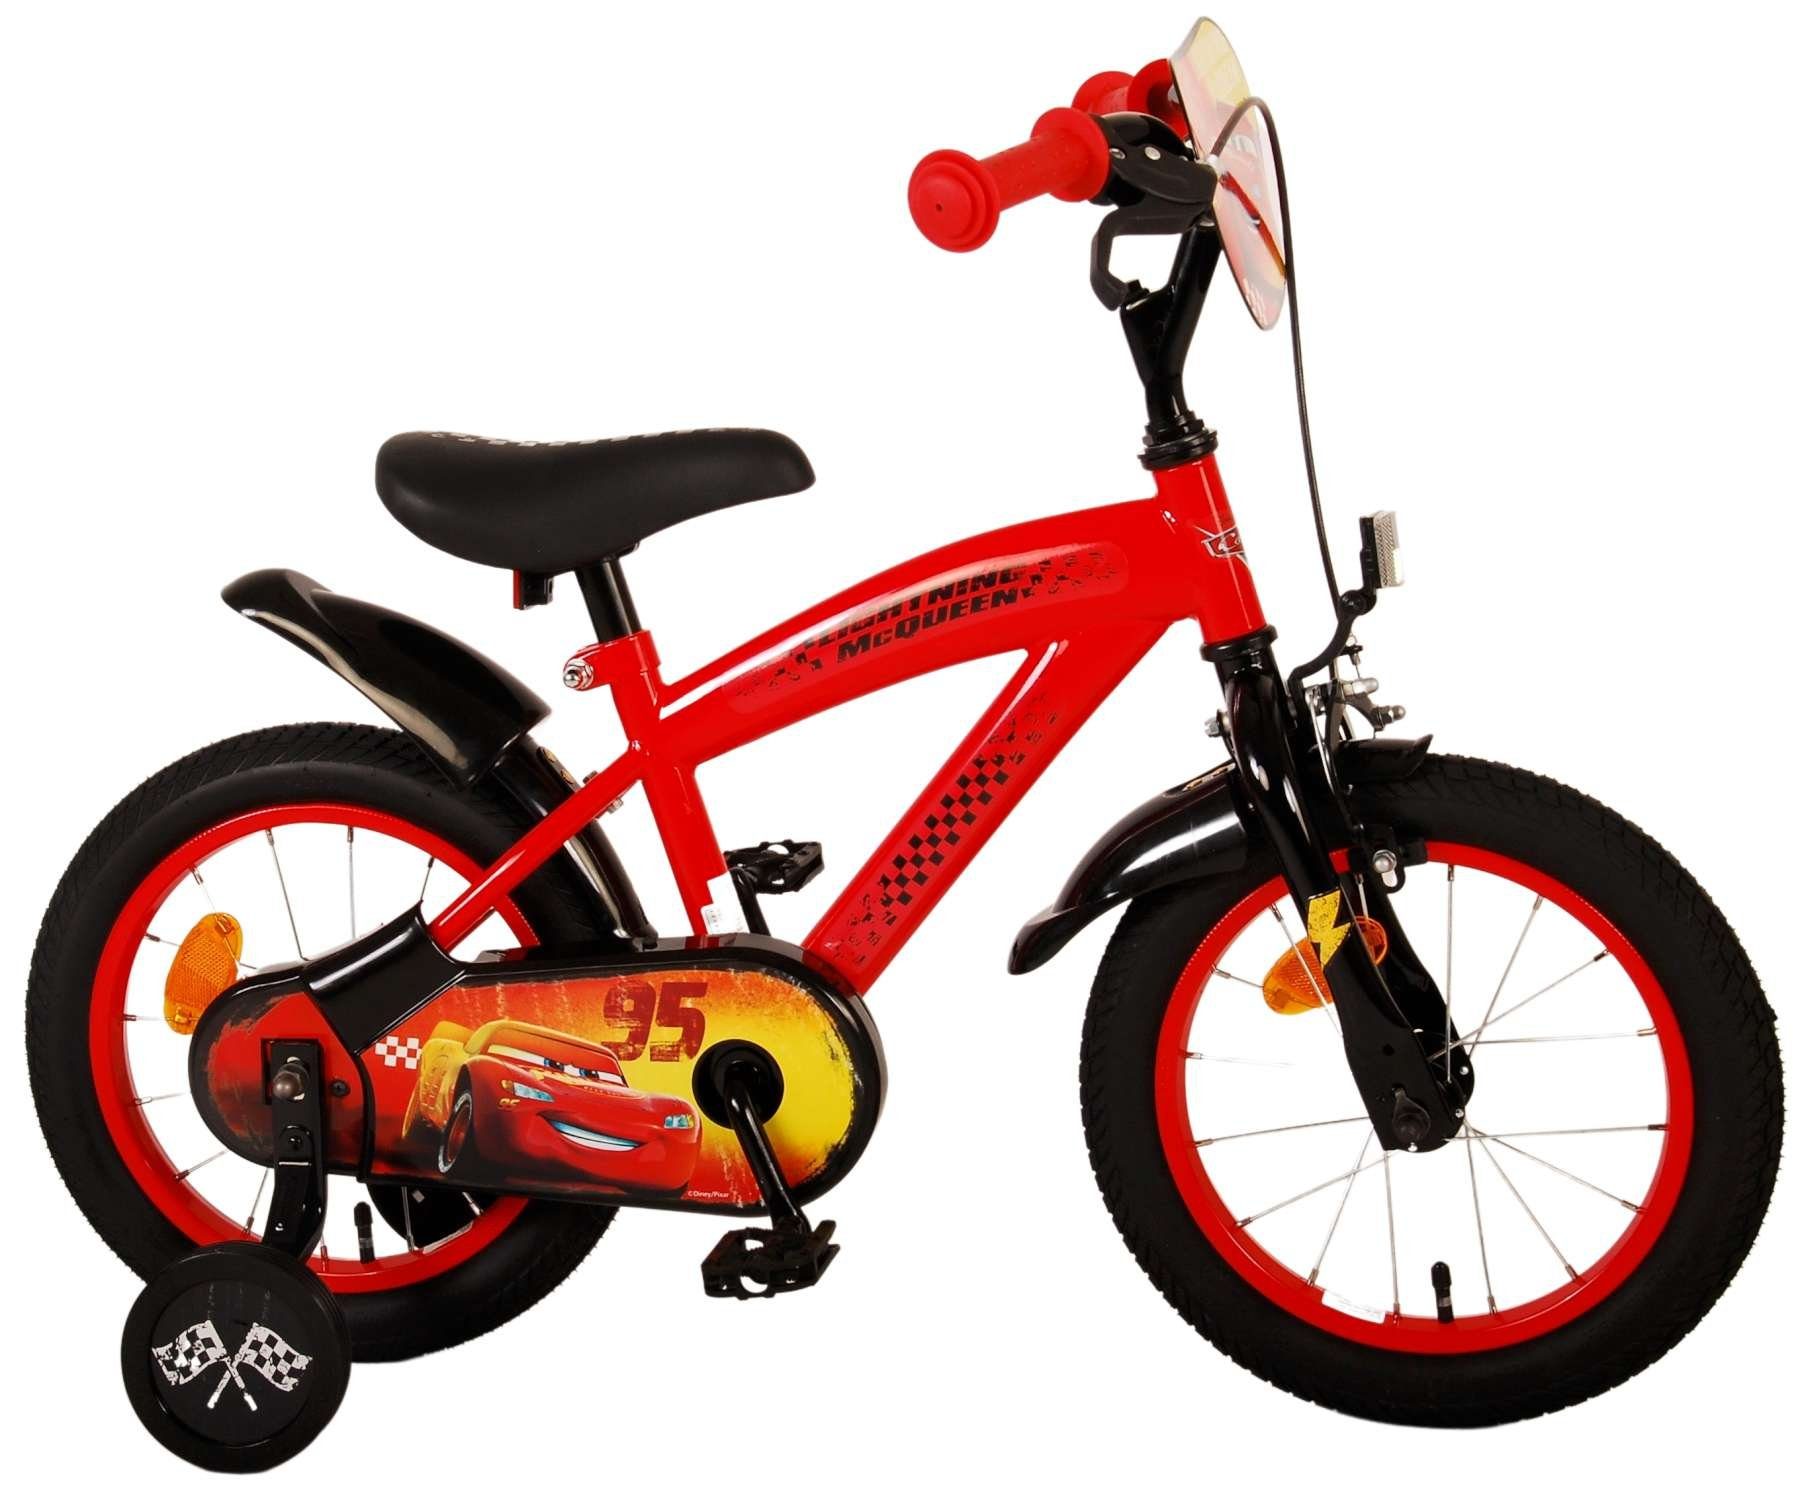 TPFSports Rot Rutschfeste Zoll Fahrrad Kinder 14 Disney 1 Stützrädern Fahrrad Cars Sicherheitsgriffe), (Jungs Zoll, mit Kinderfahrrad - 14 Gang, -